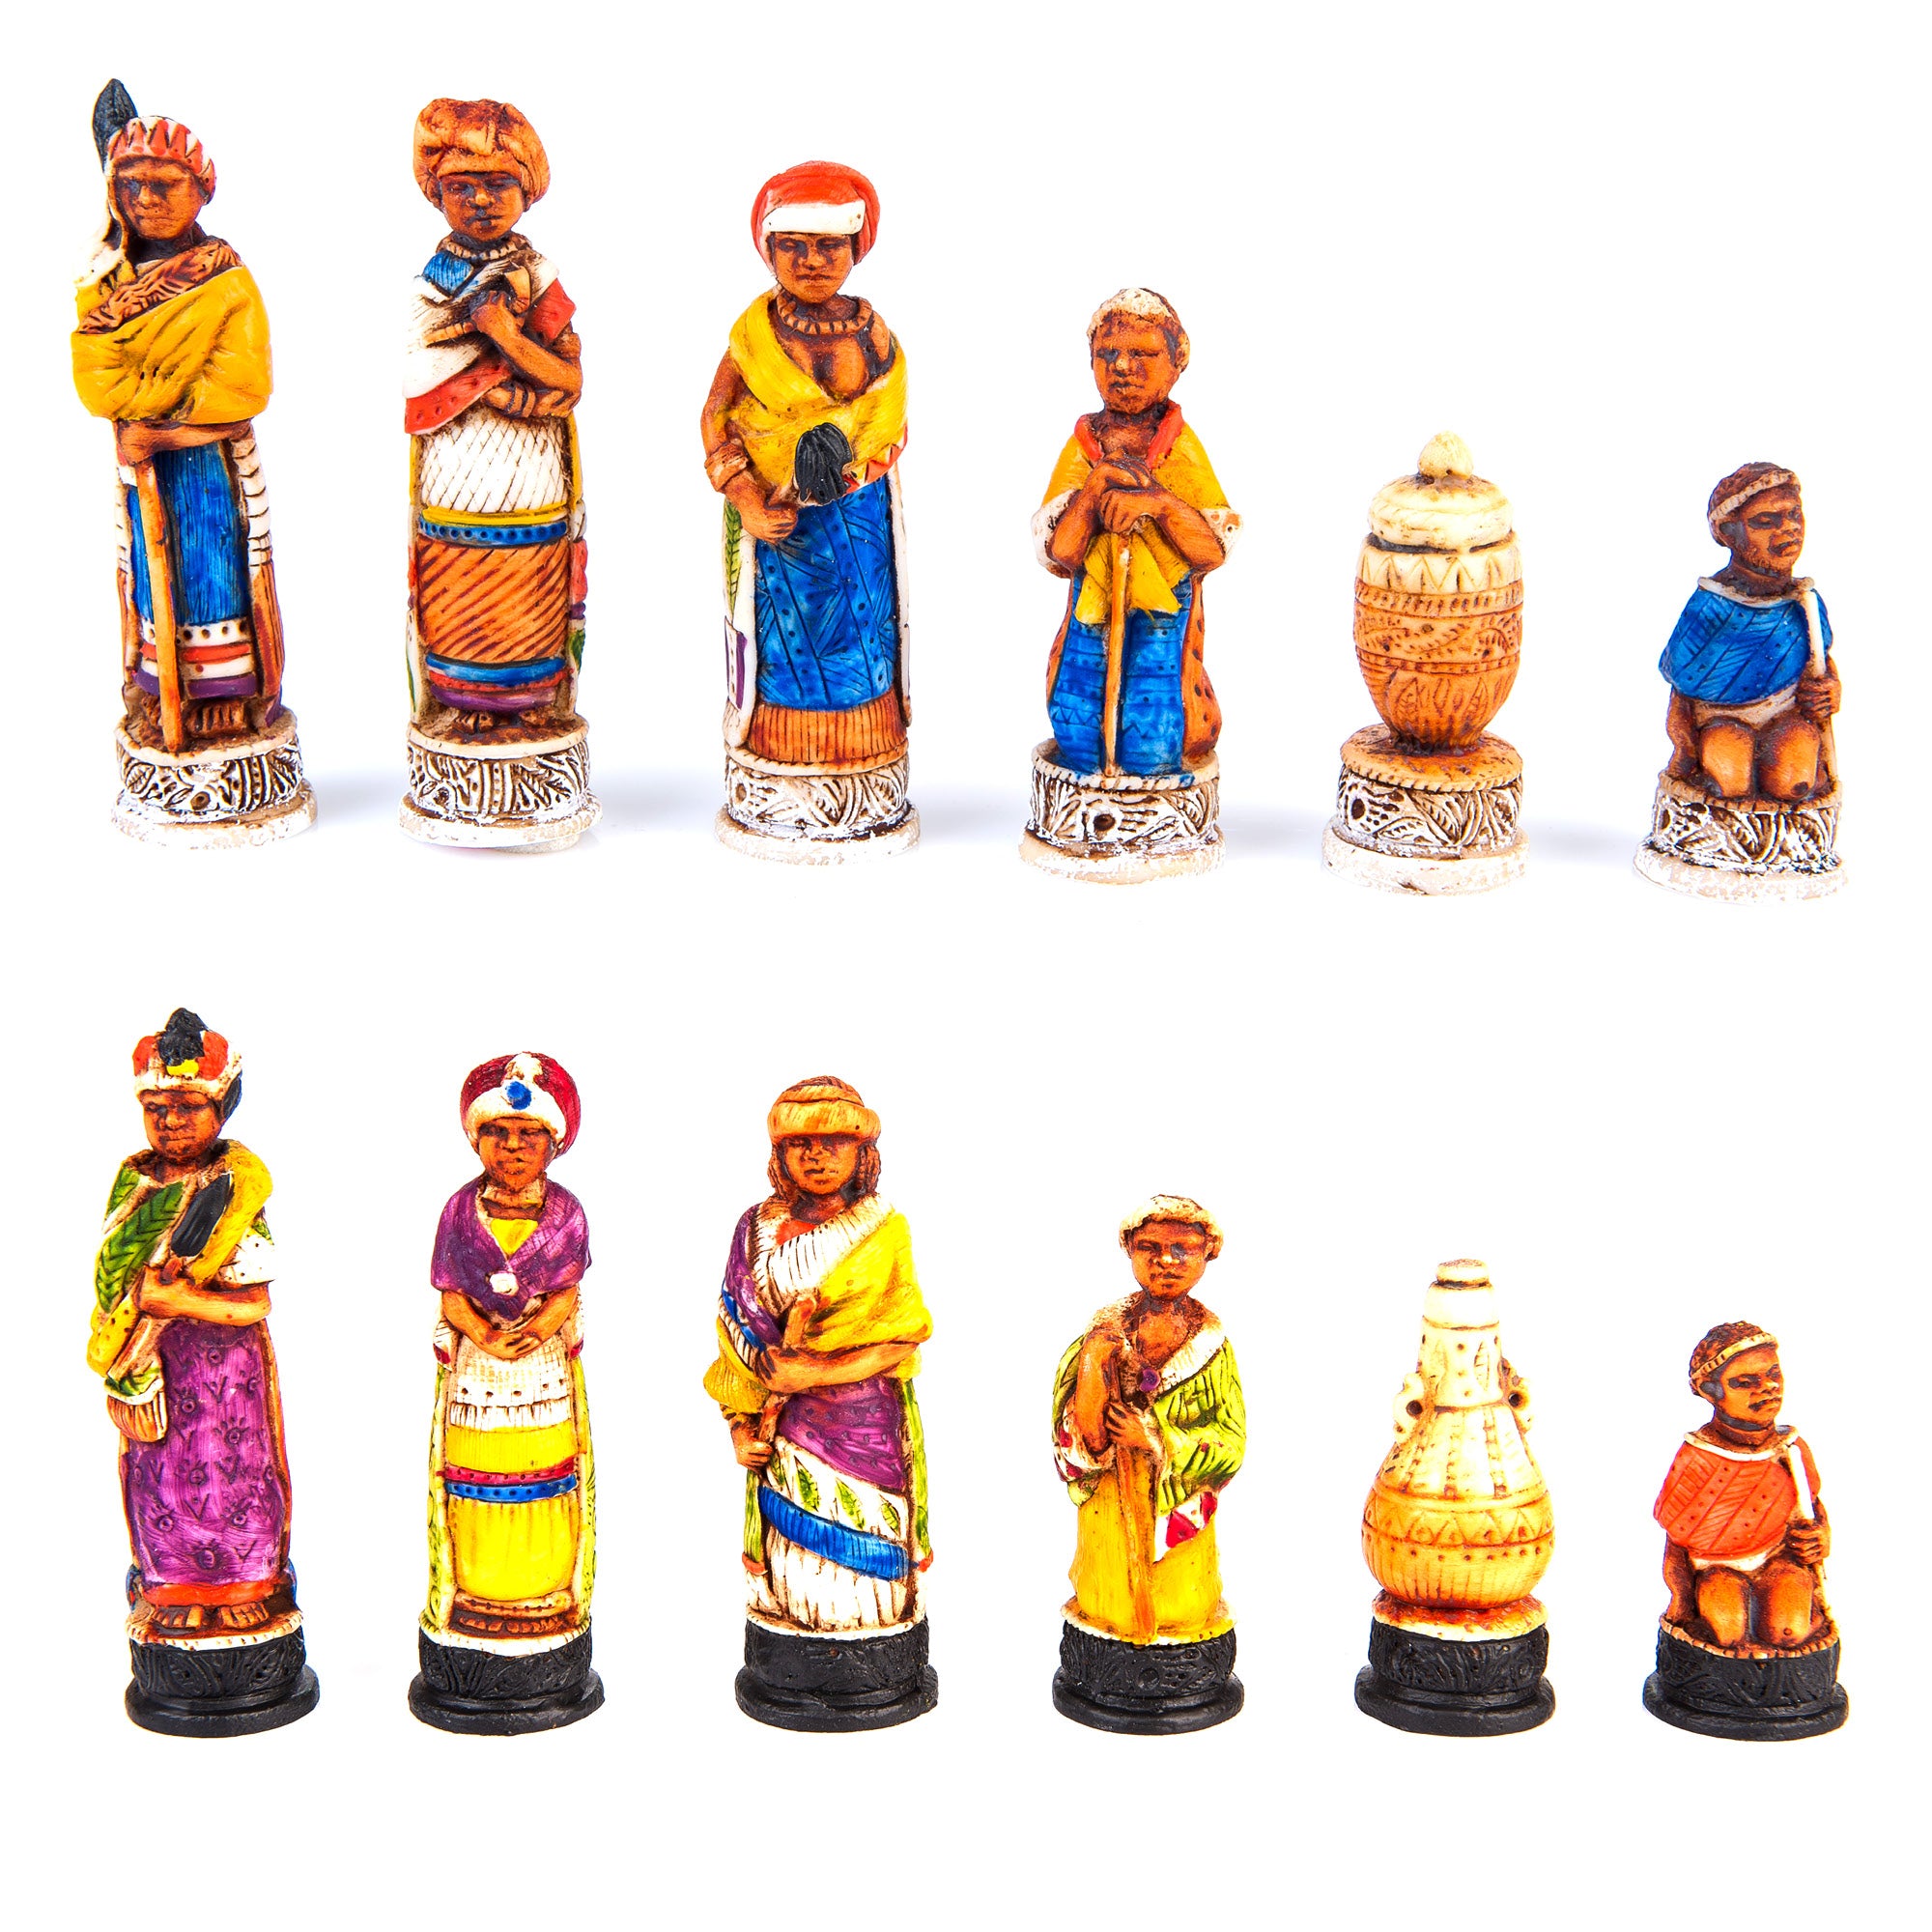 Mini Tribal Chess Set Colour